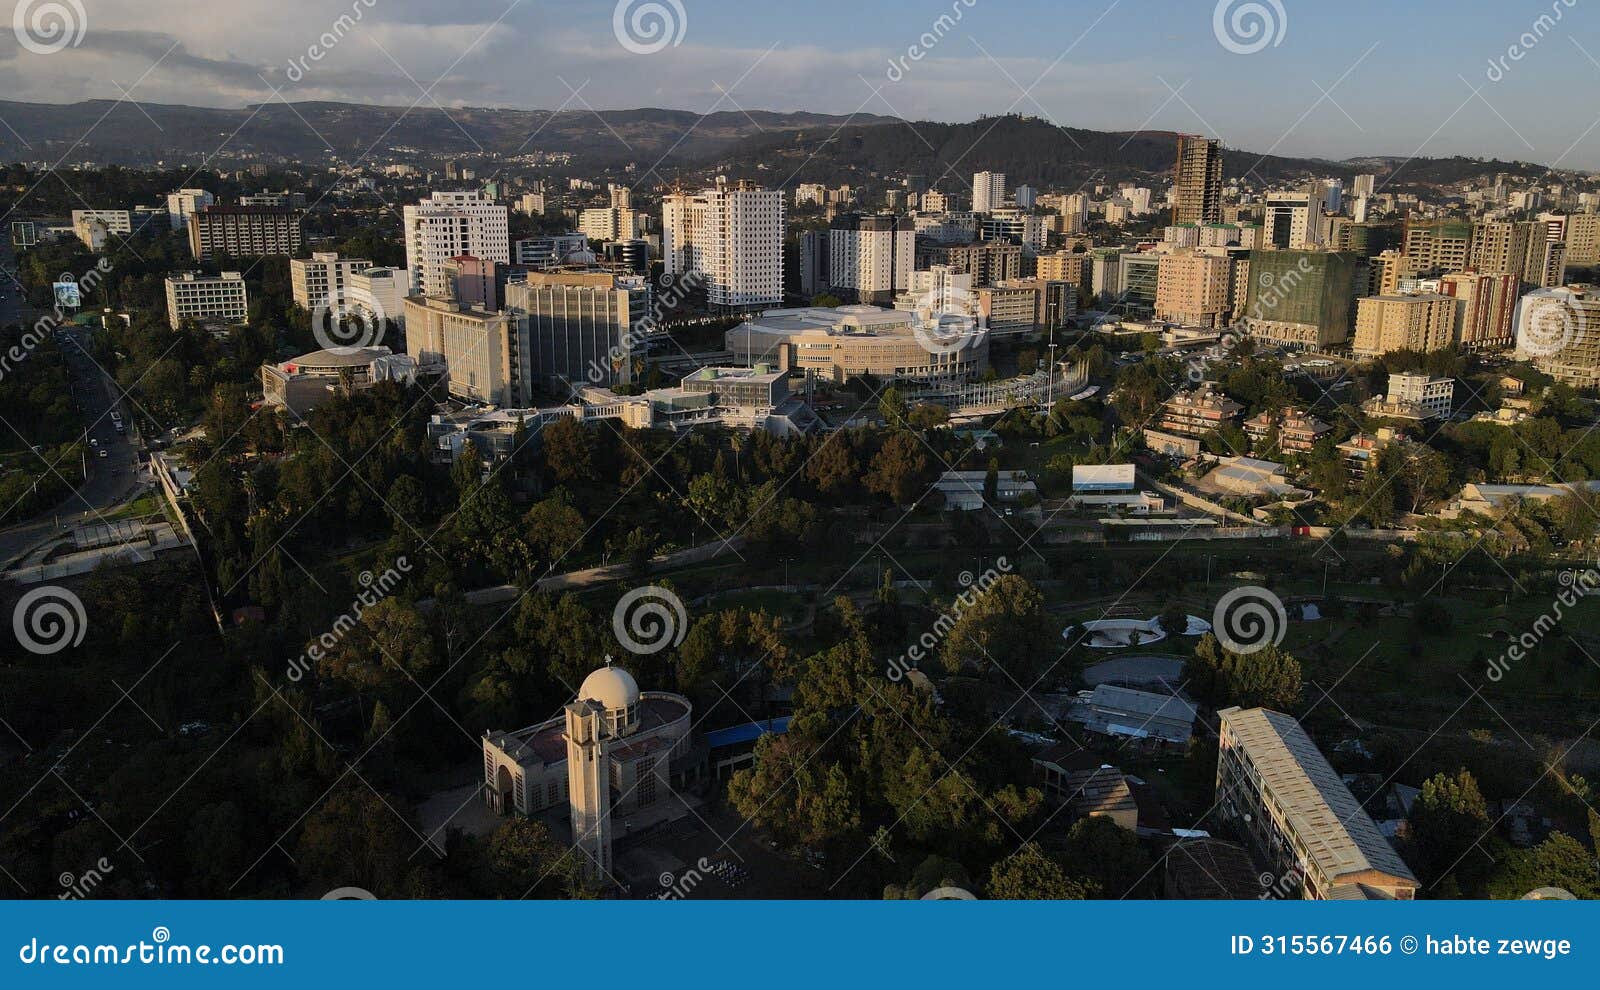 addis ababa city, aerial view, addis ababa ethiopia,